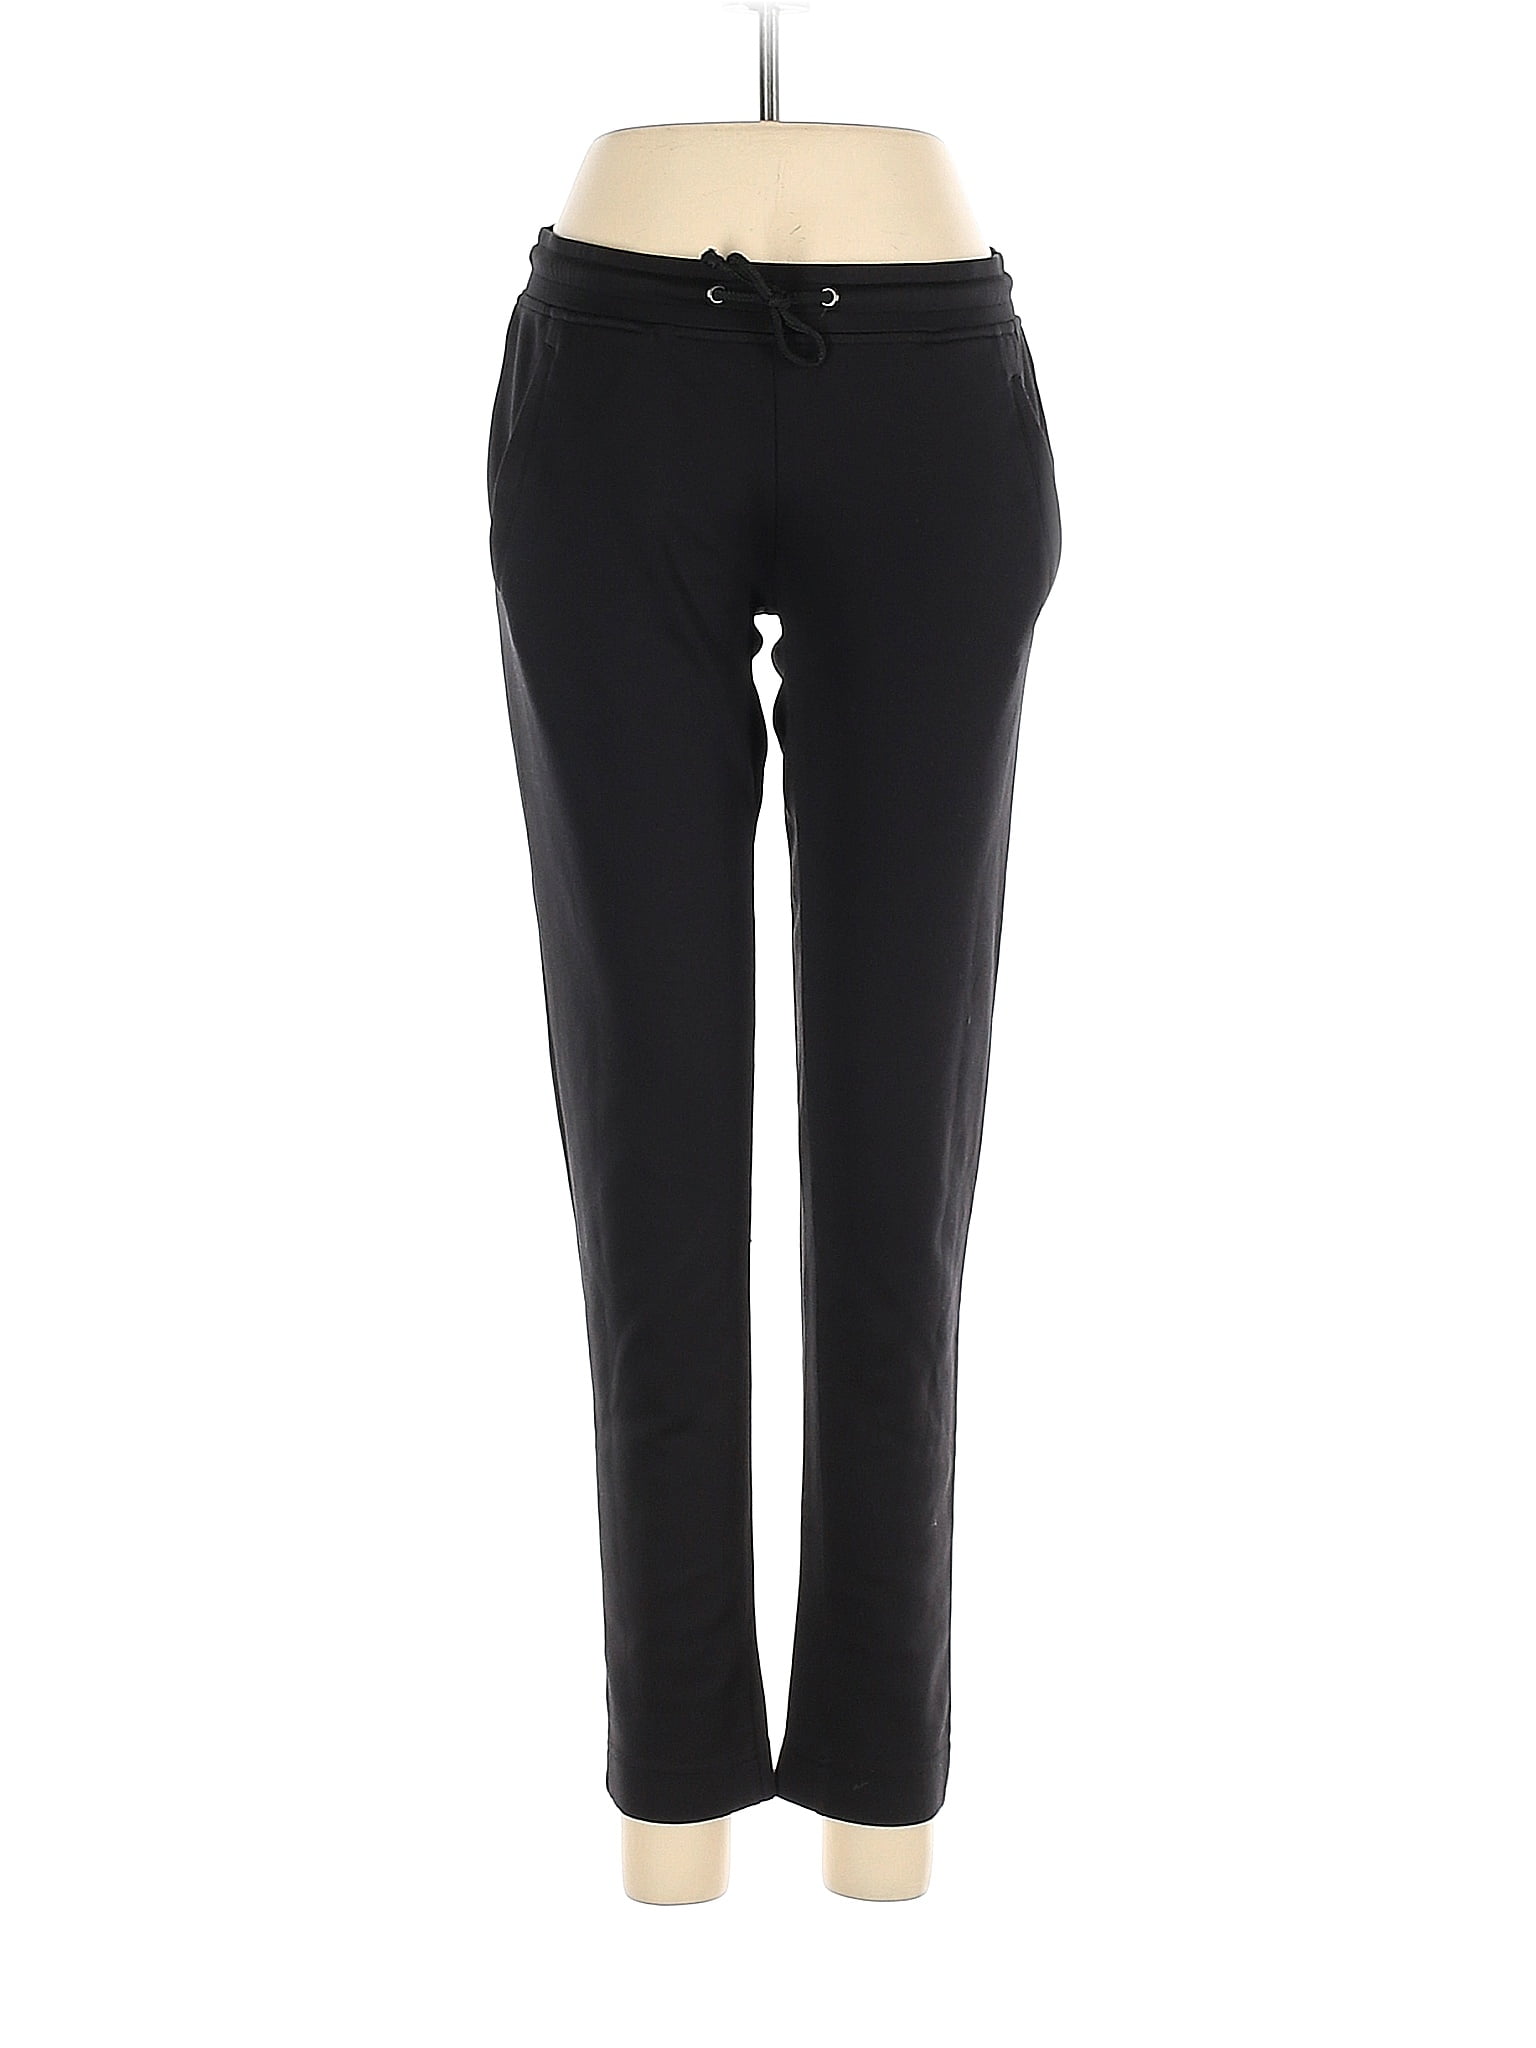 Joe Fresh Black Sweatpants Size XS - 55% off | thredUP